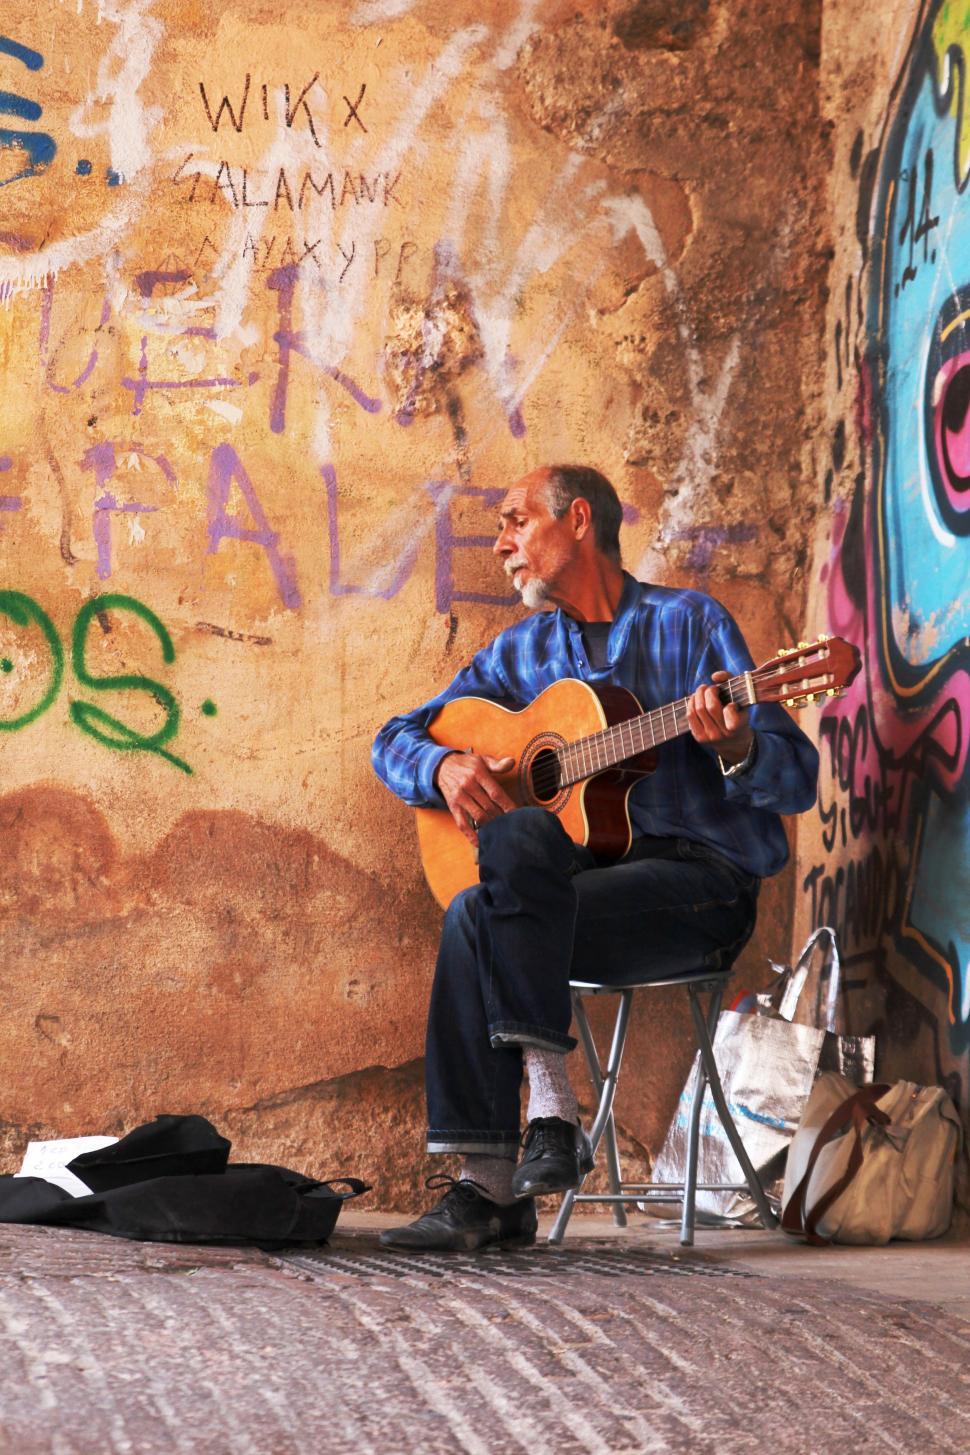 Free Image of Street performer: Old Guitarist 